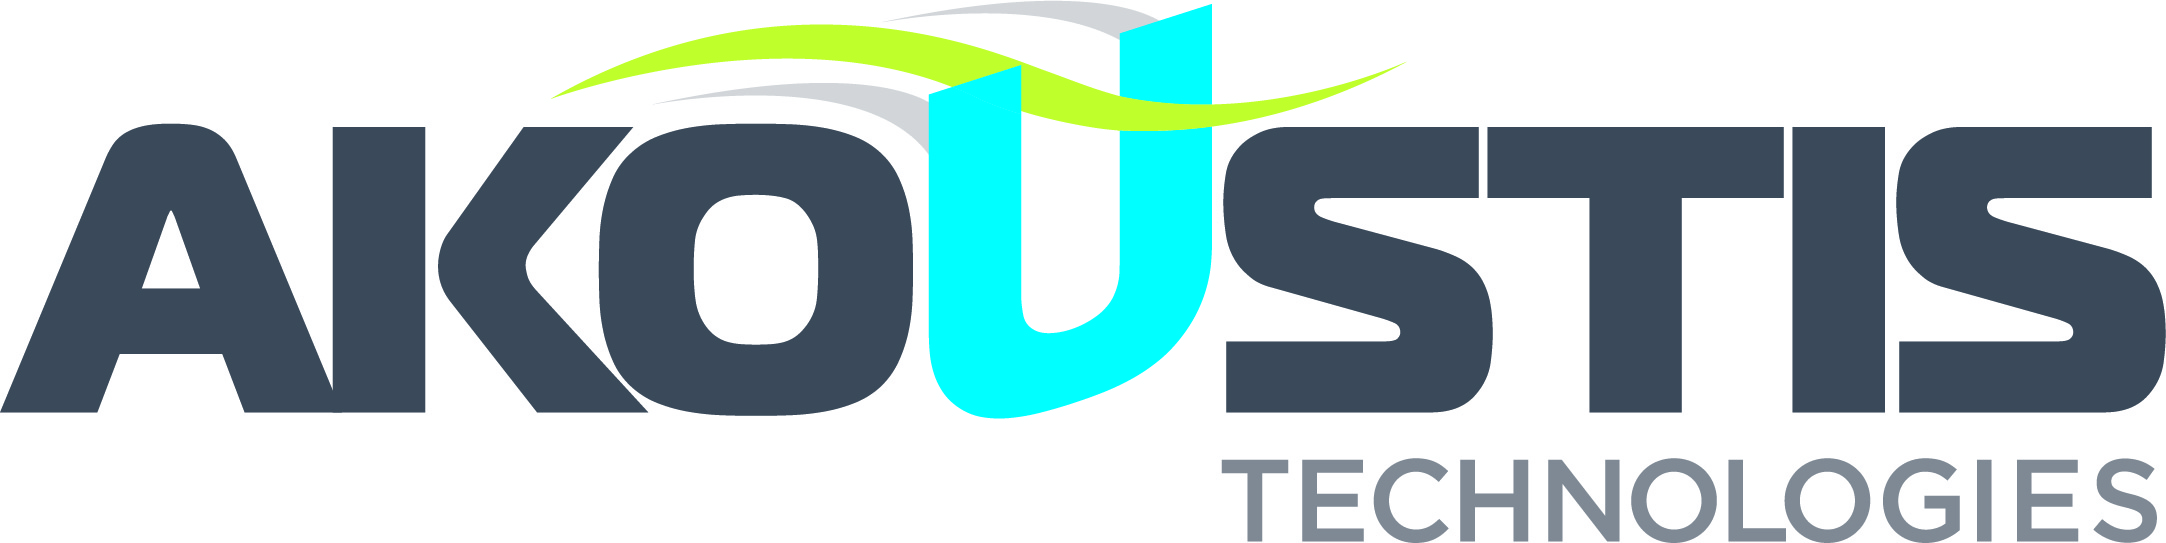 AkoustisTech logo.jpg